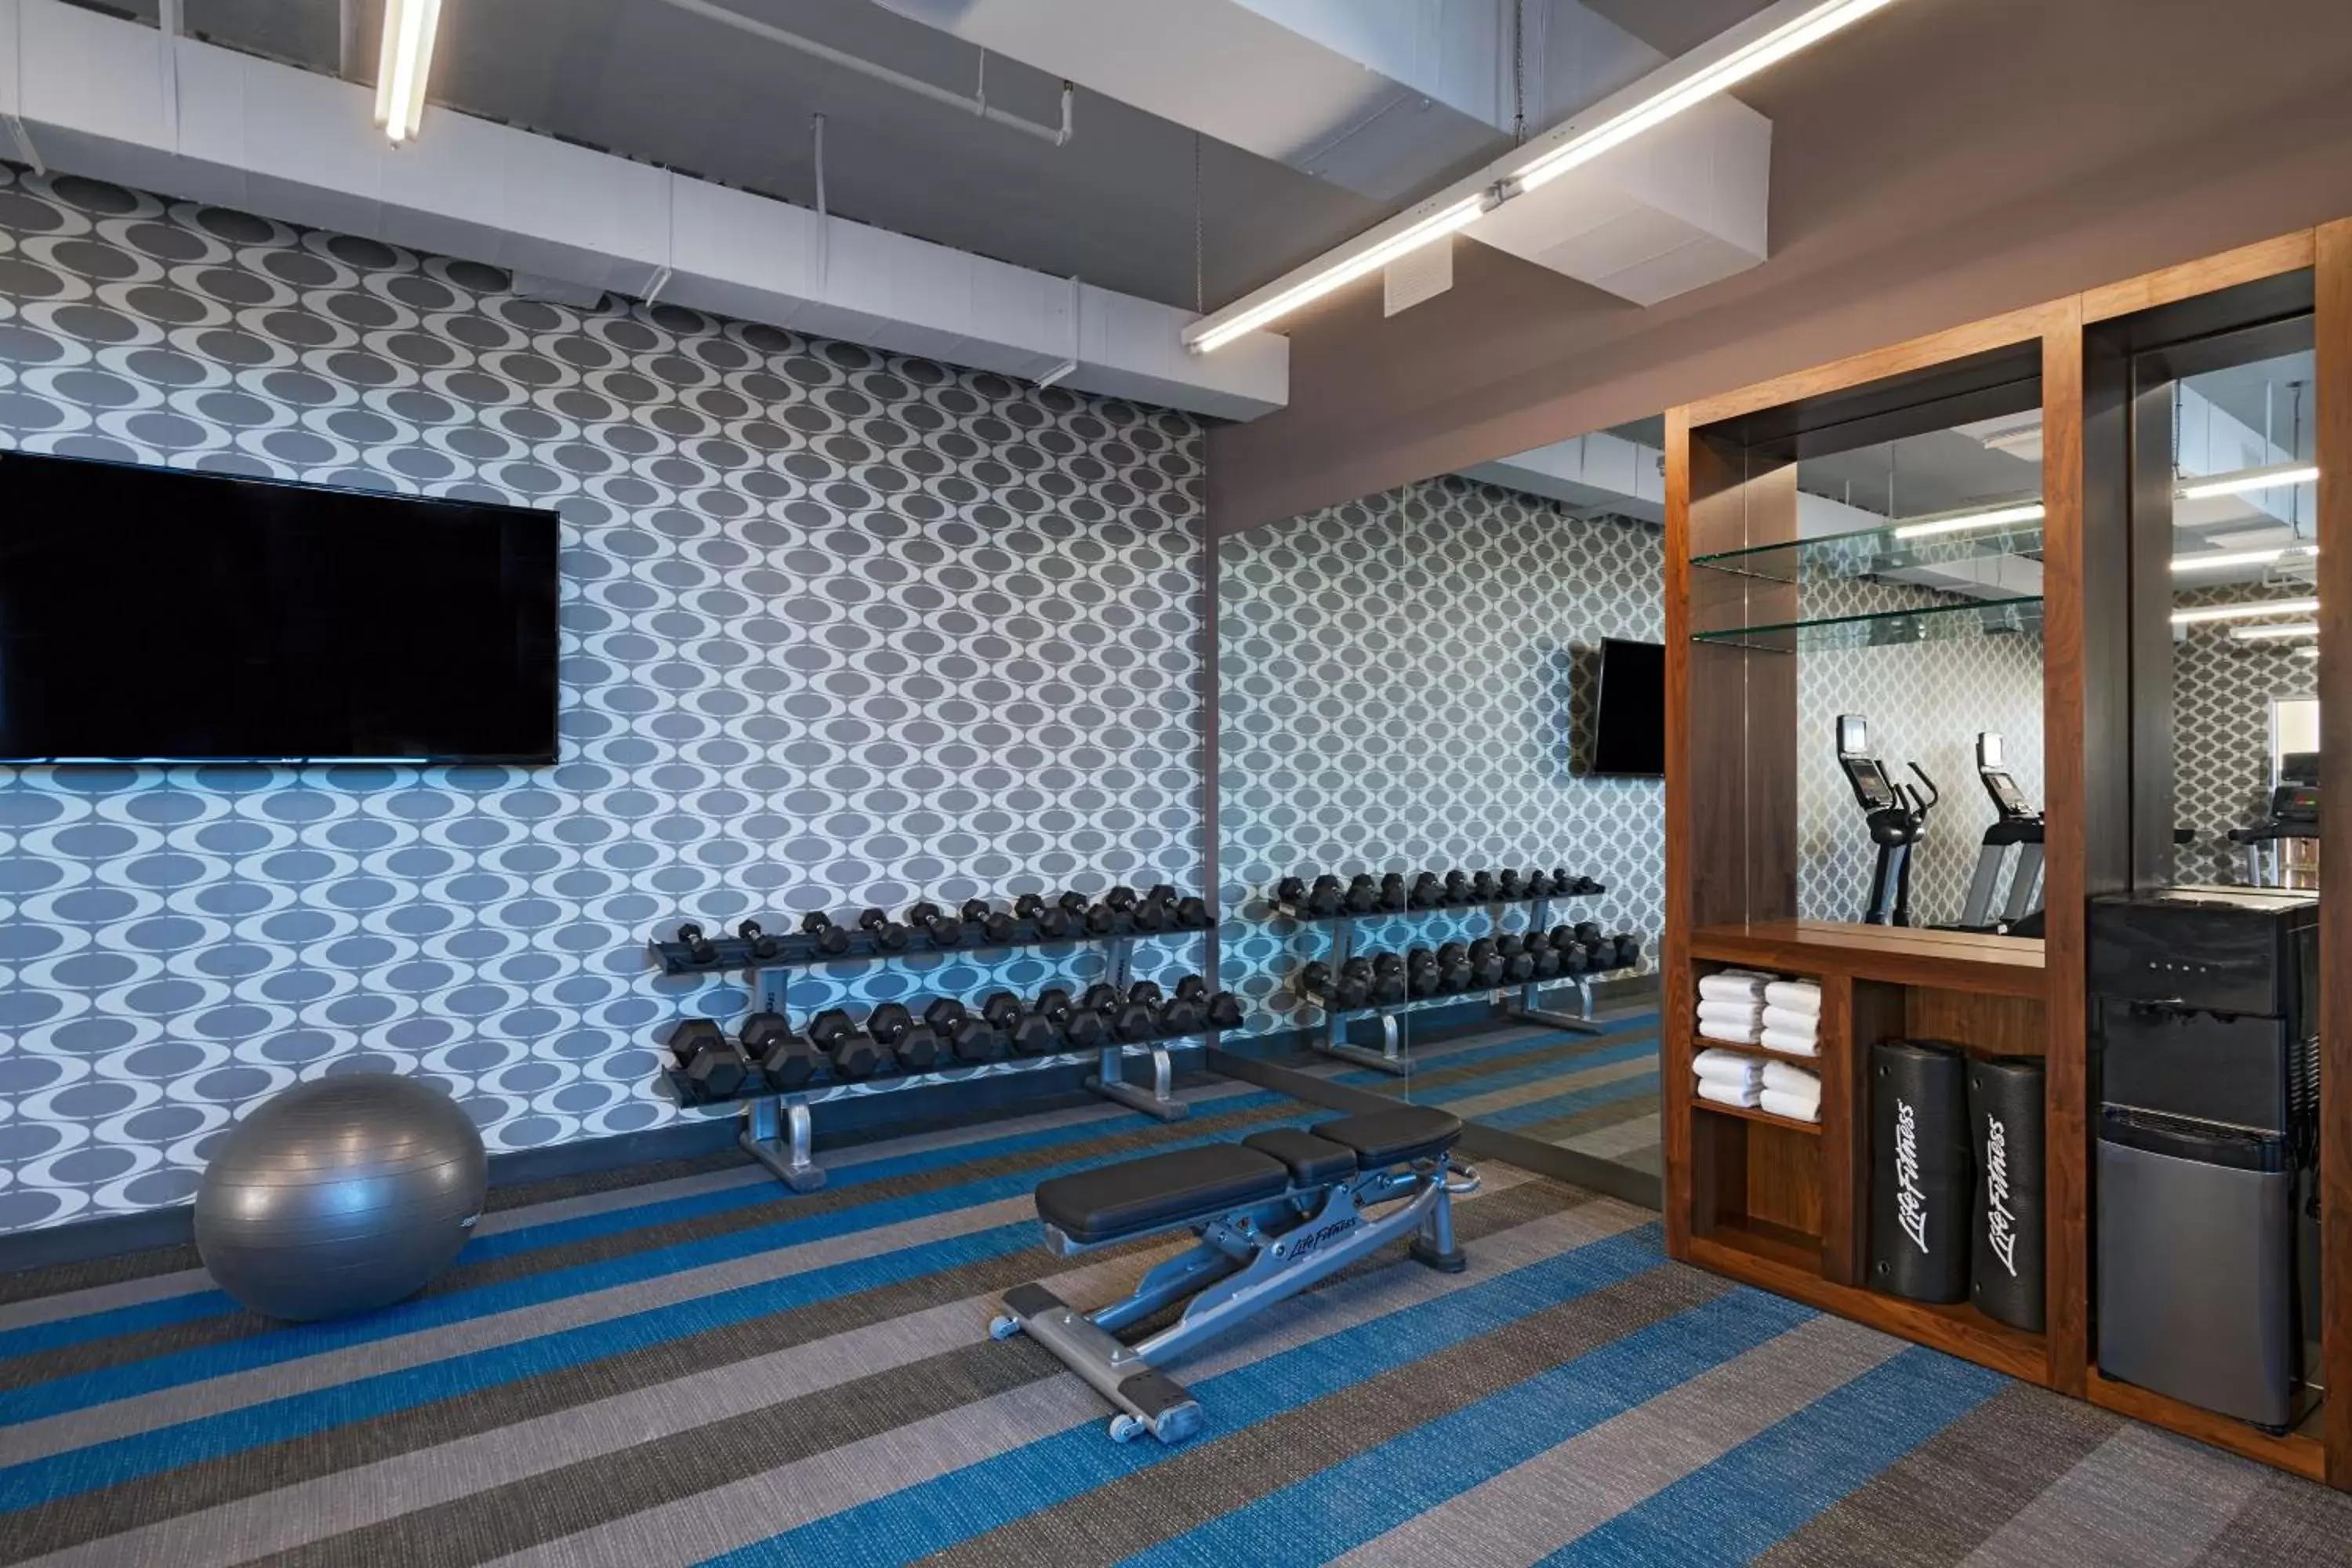 Fitness centre/facilities, Fitness Center/Facilities in Aloft Waco Baylor